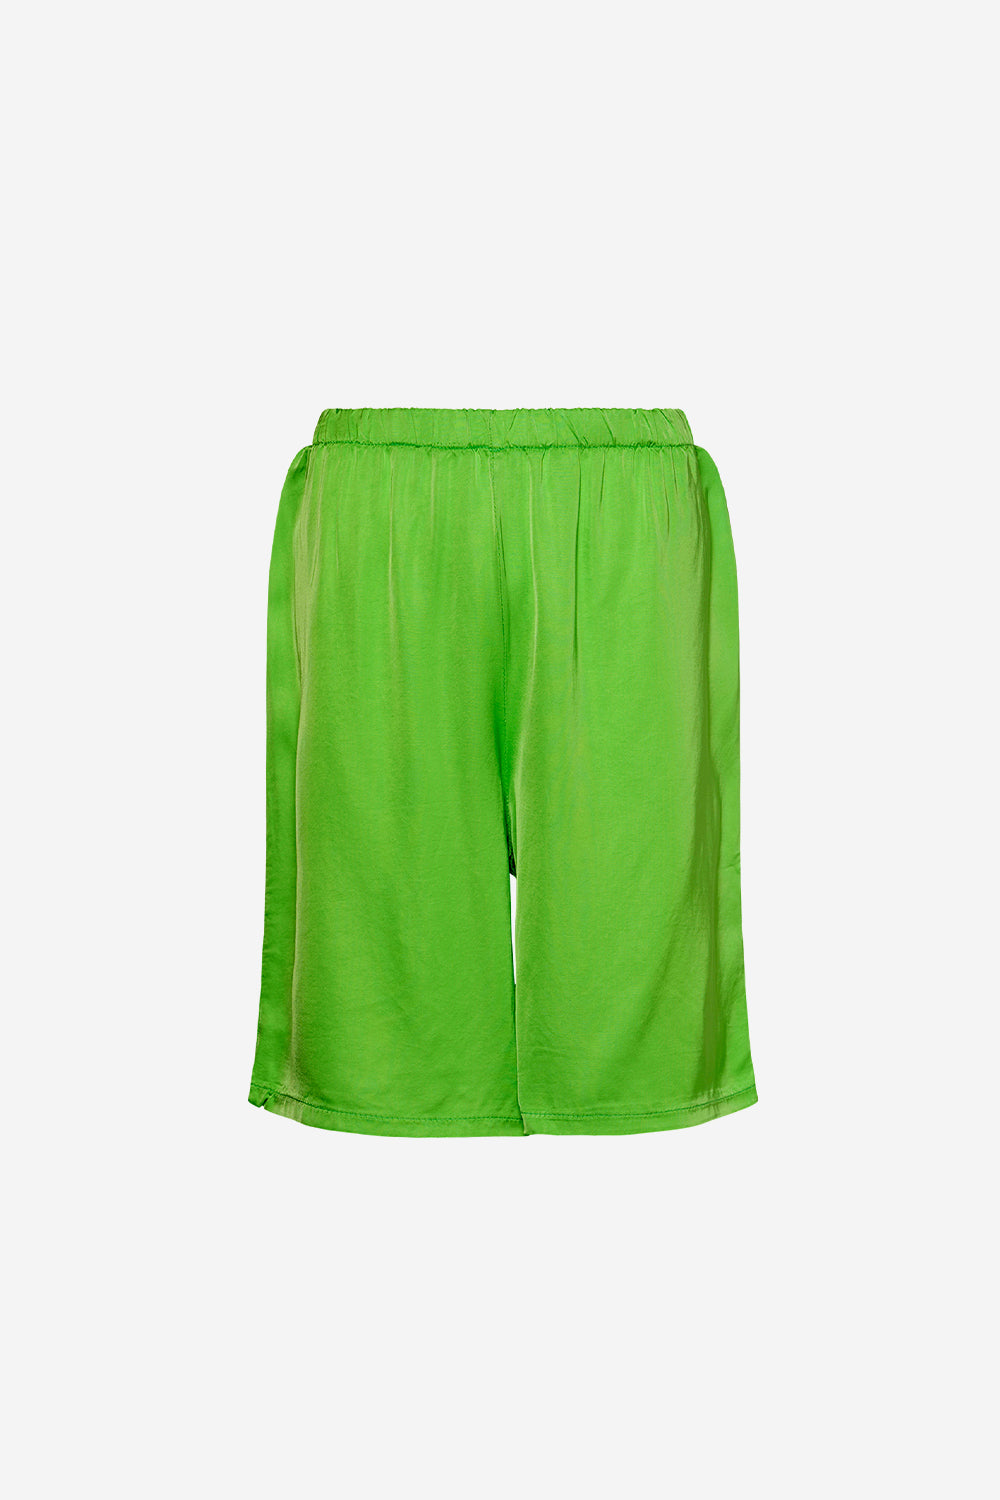 Nilma Shorts Green